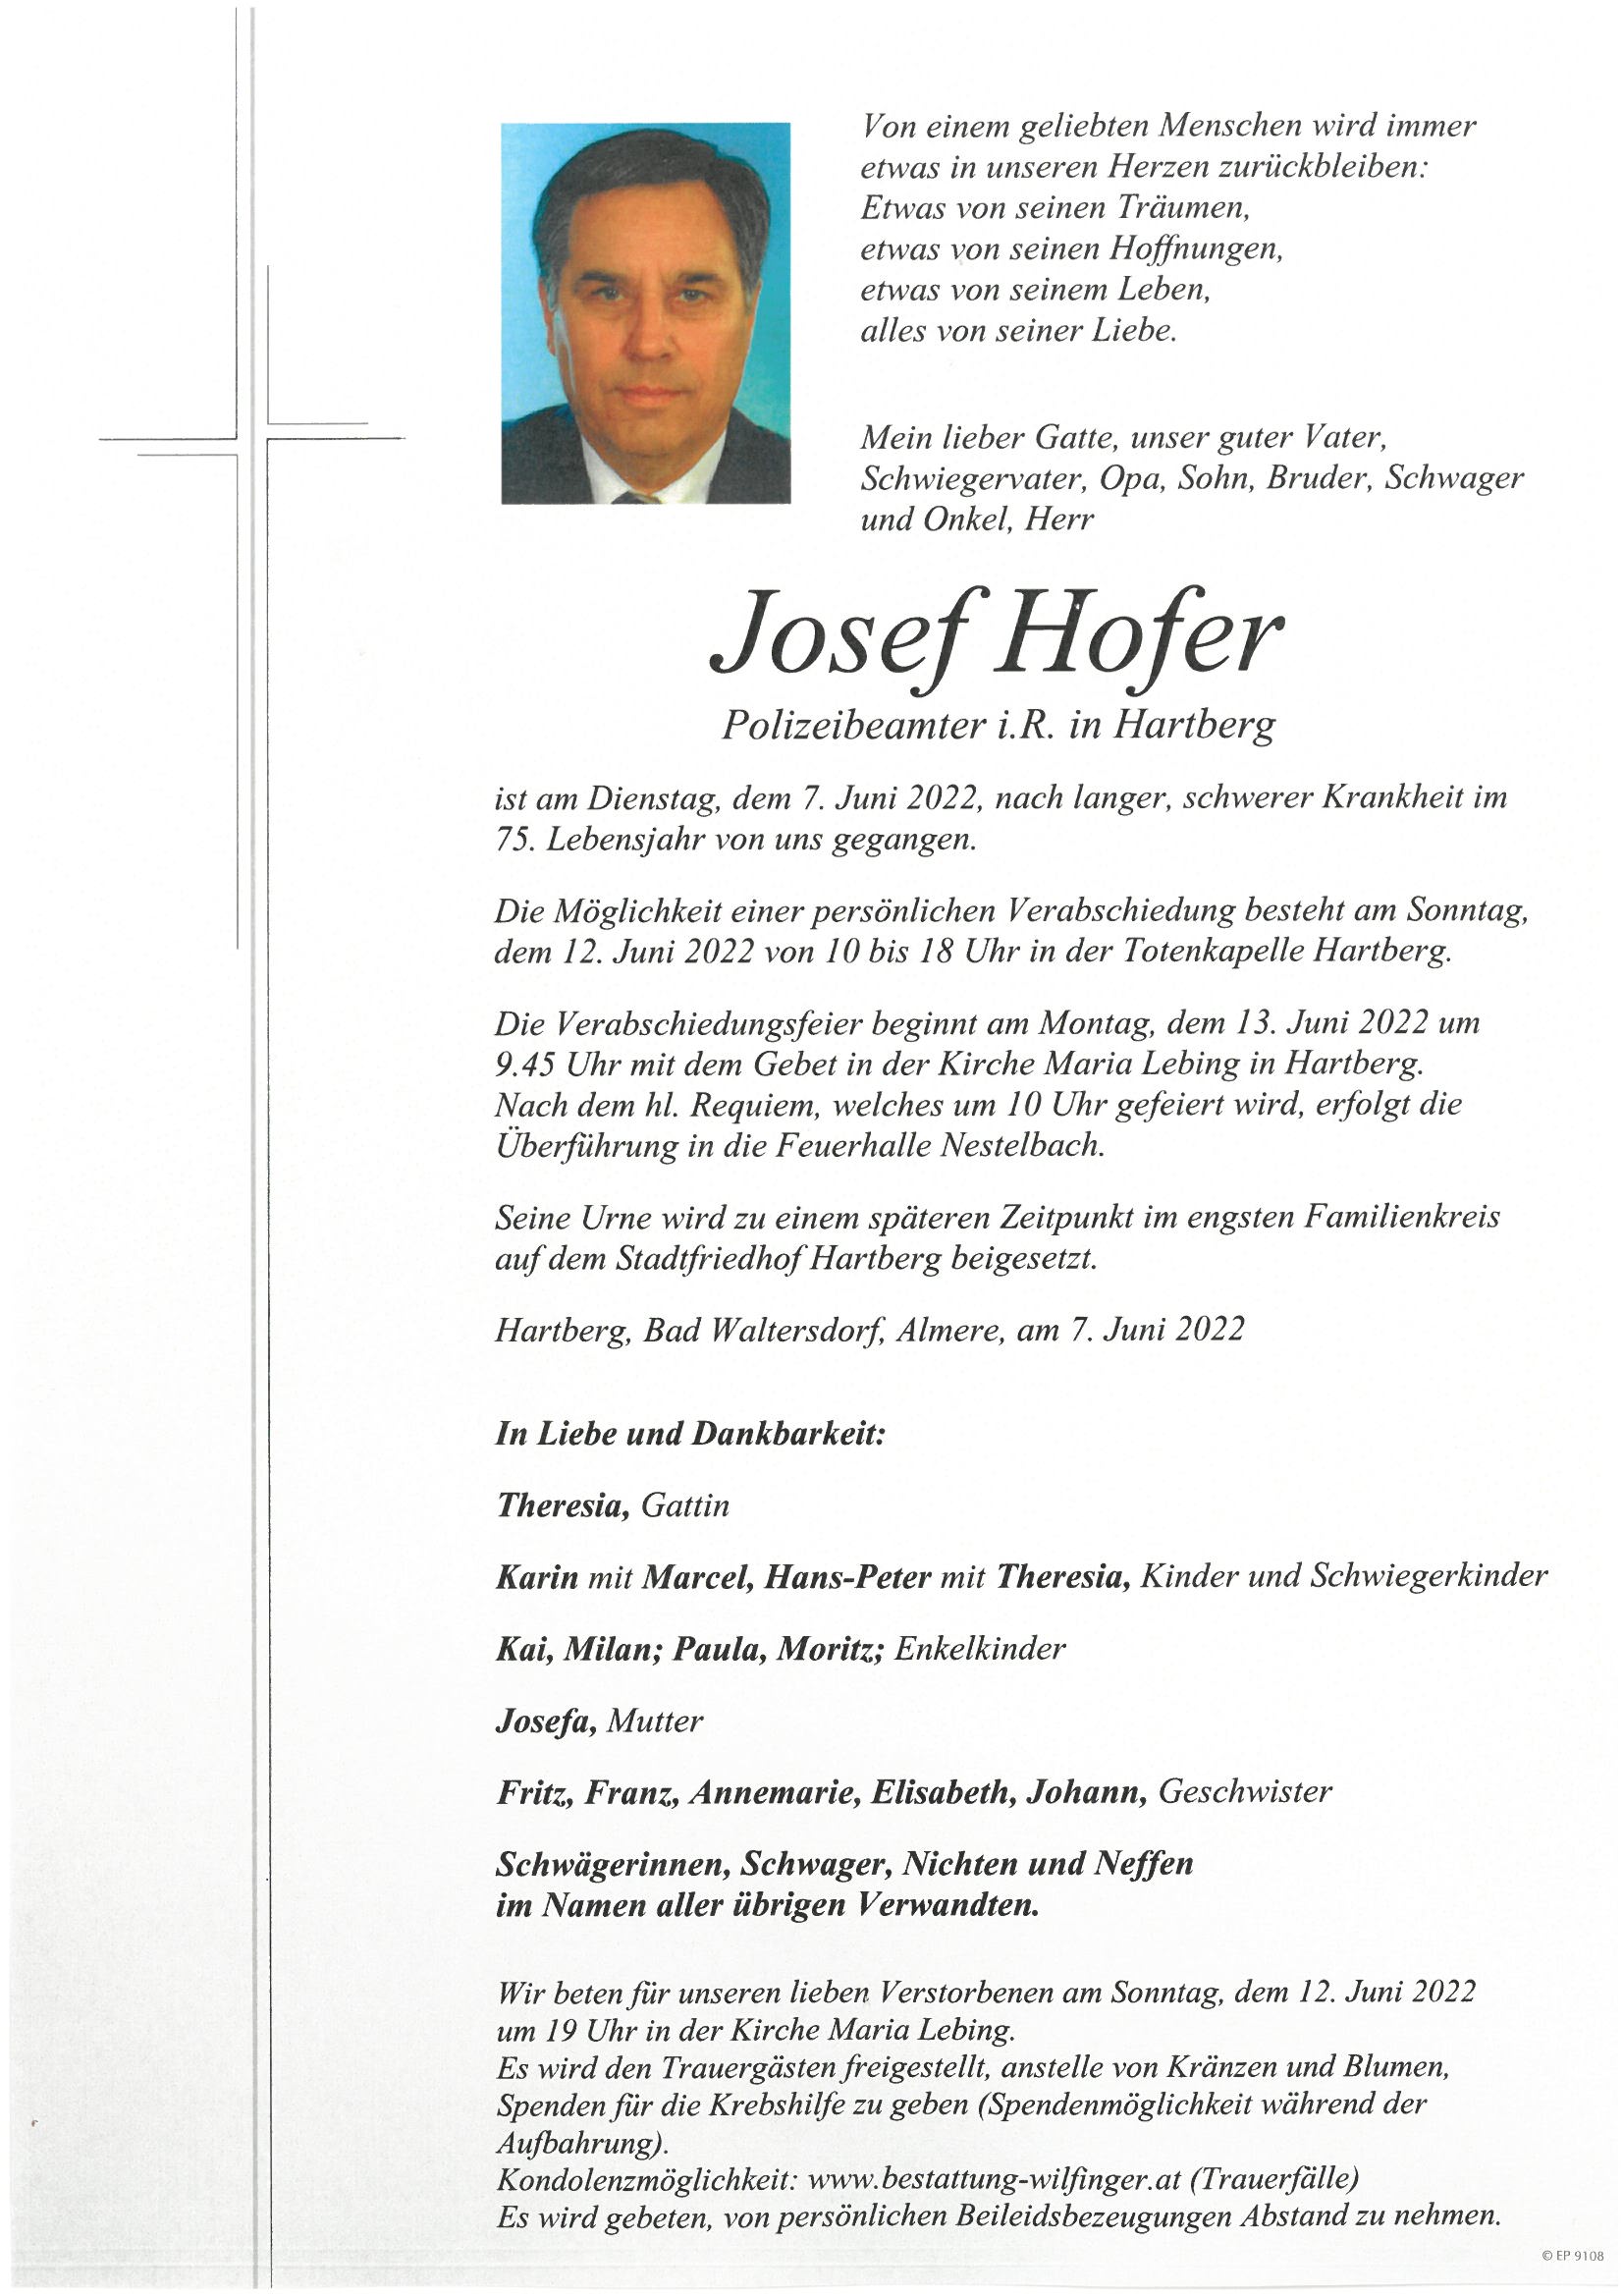 Josef Hofer, Hartberg